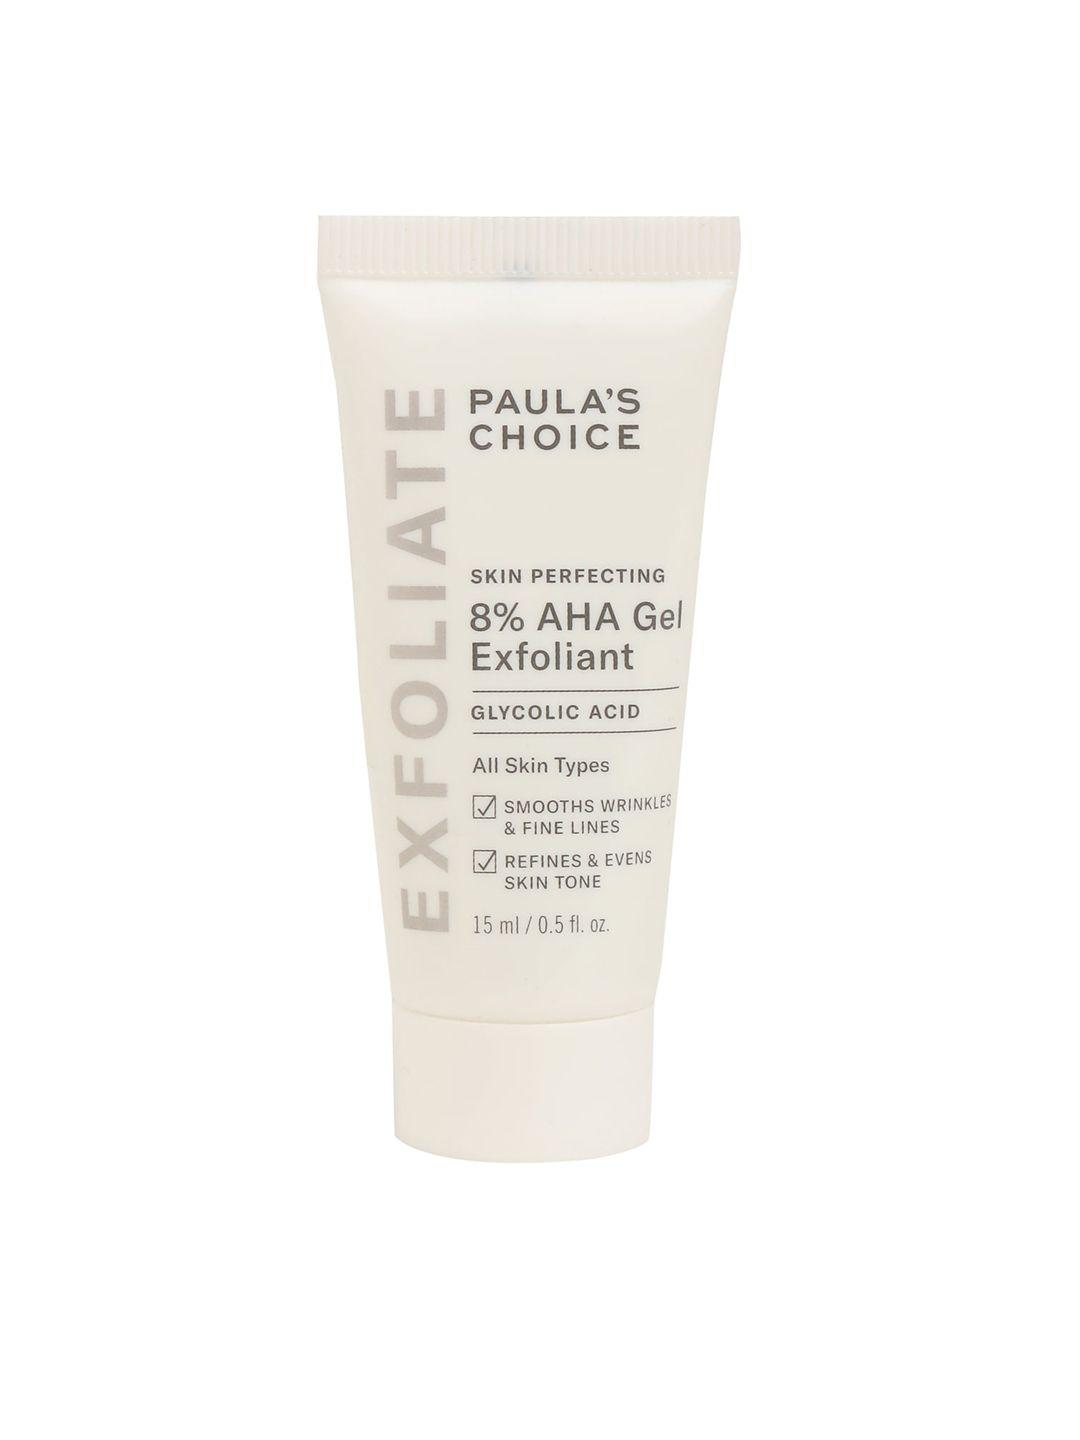 paulas choice glycolic acid skin perfecting 8% aha gel exfoliant 15 ml